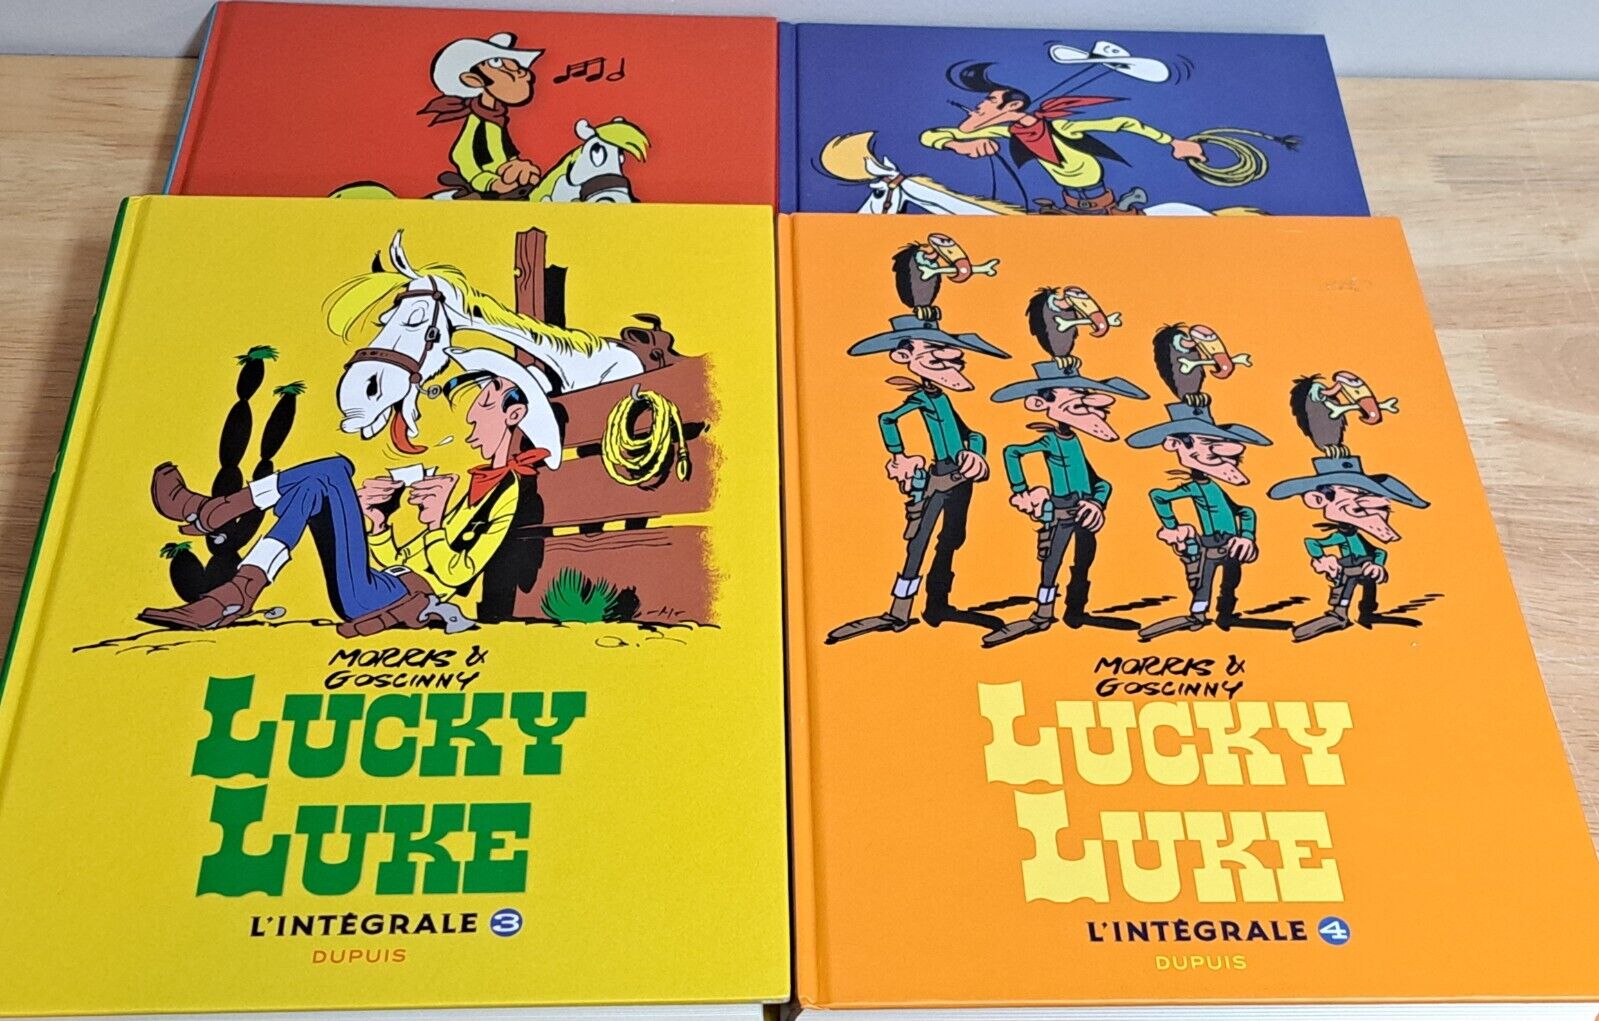 LUCKY LUKE L'INTEGRALE 4 BOOKS LOT  1-4  BY MORRIS & GOSCINNY PUBLISHER DUPUIS